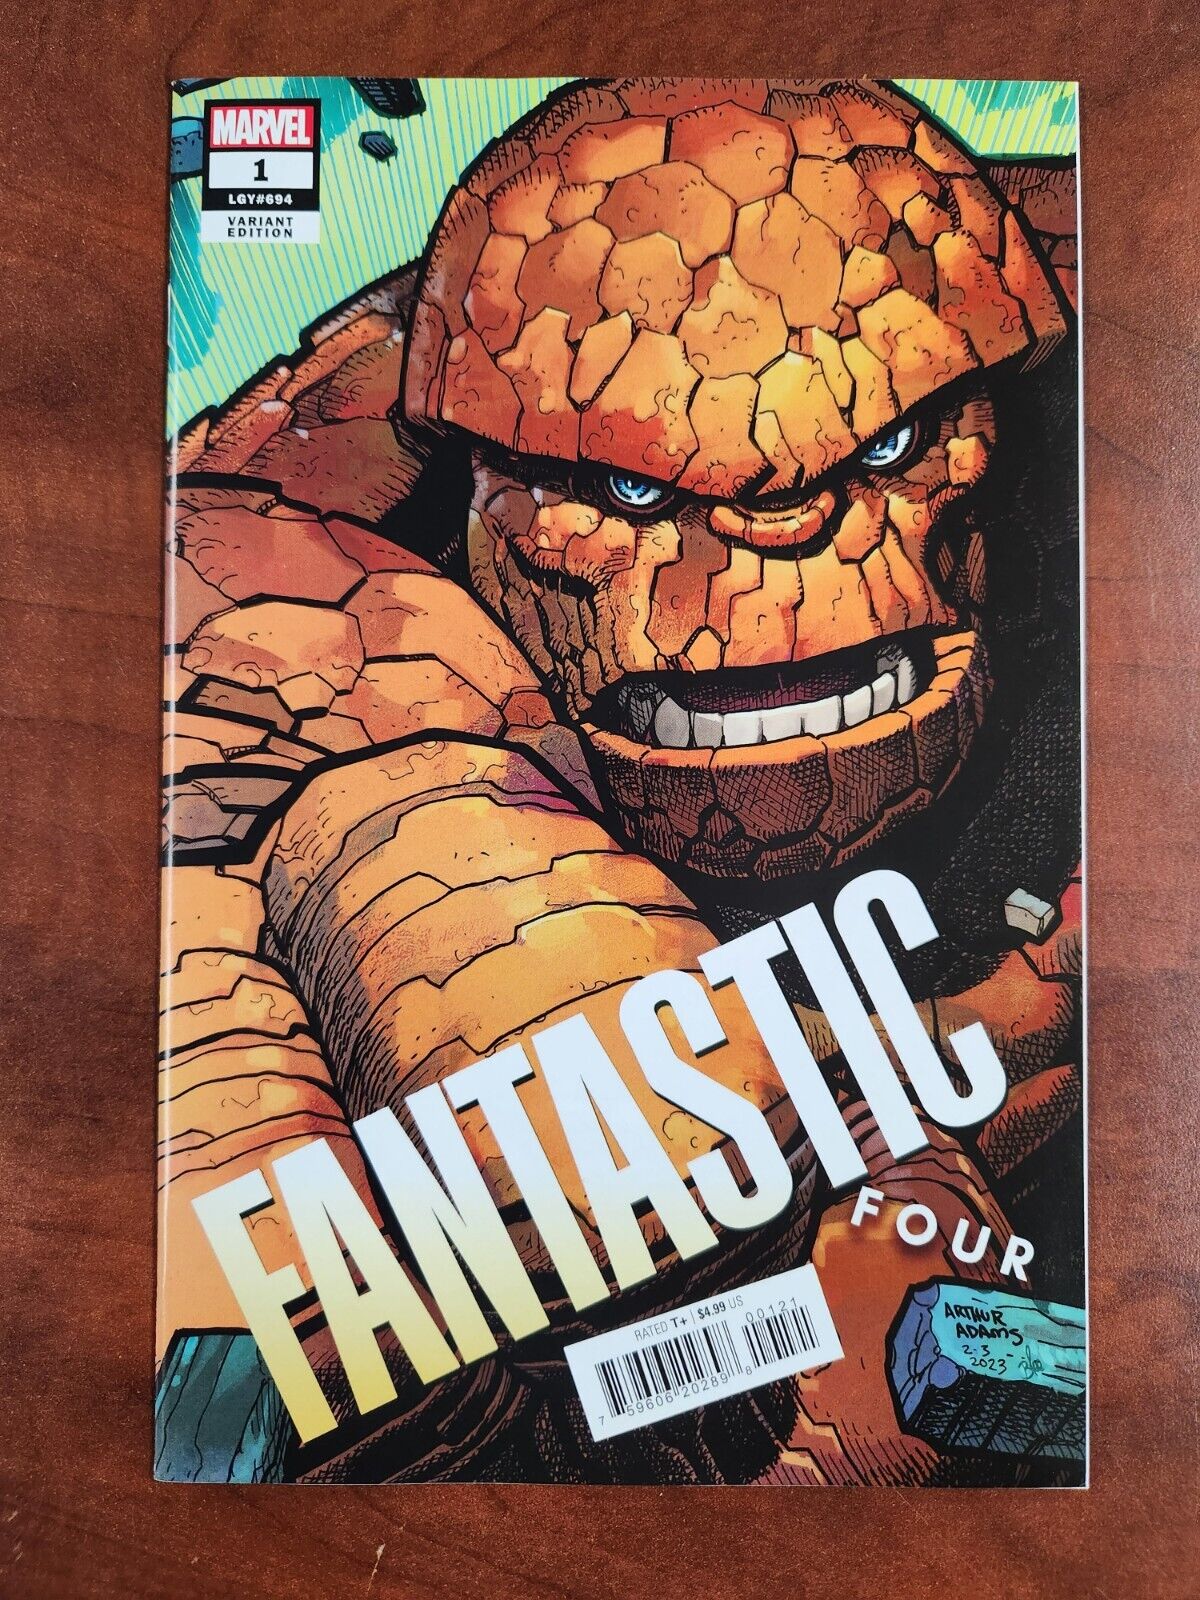 FANTASTIC FOUR #1 Arthur Adams 1:25 Ratio Variant Cover Marvel Comics🔥